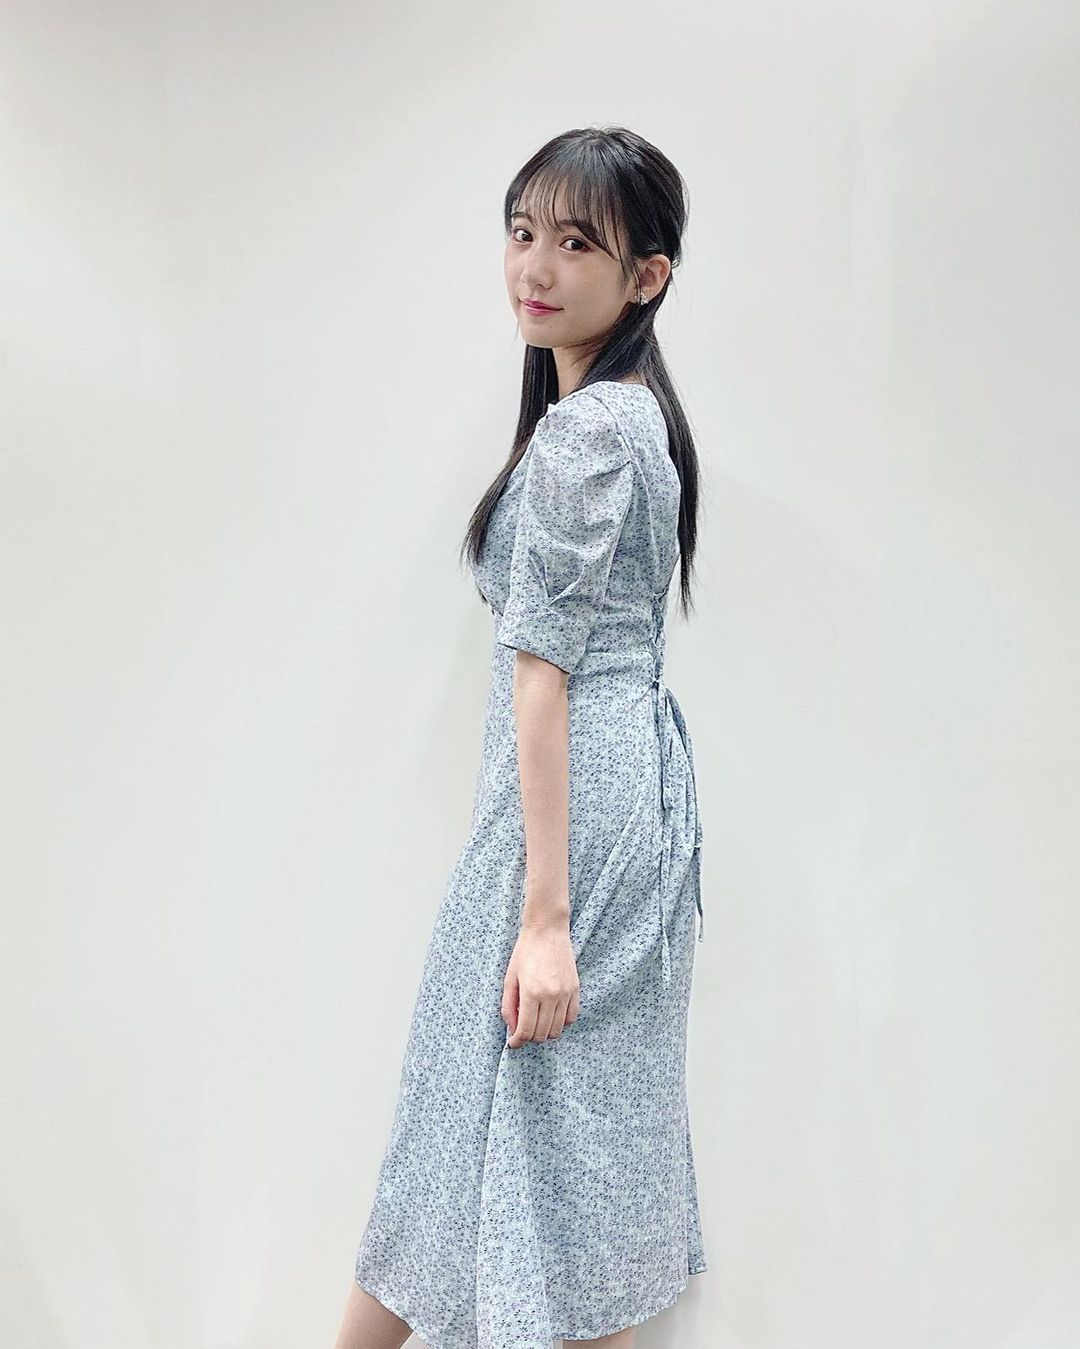 NMB48新一代乳神「橫野すみれ」中路大開外洩飽滿乳彈　魅惑表情不敢相信她才19歲